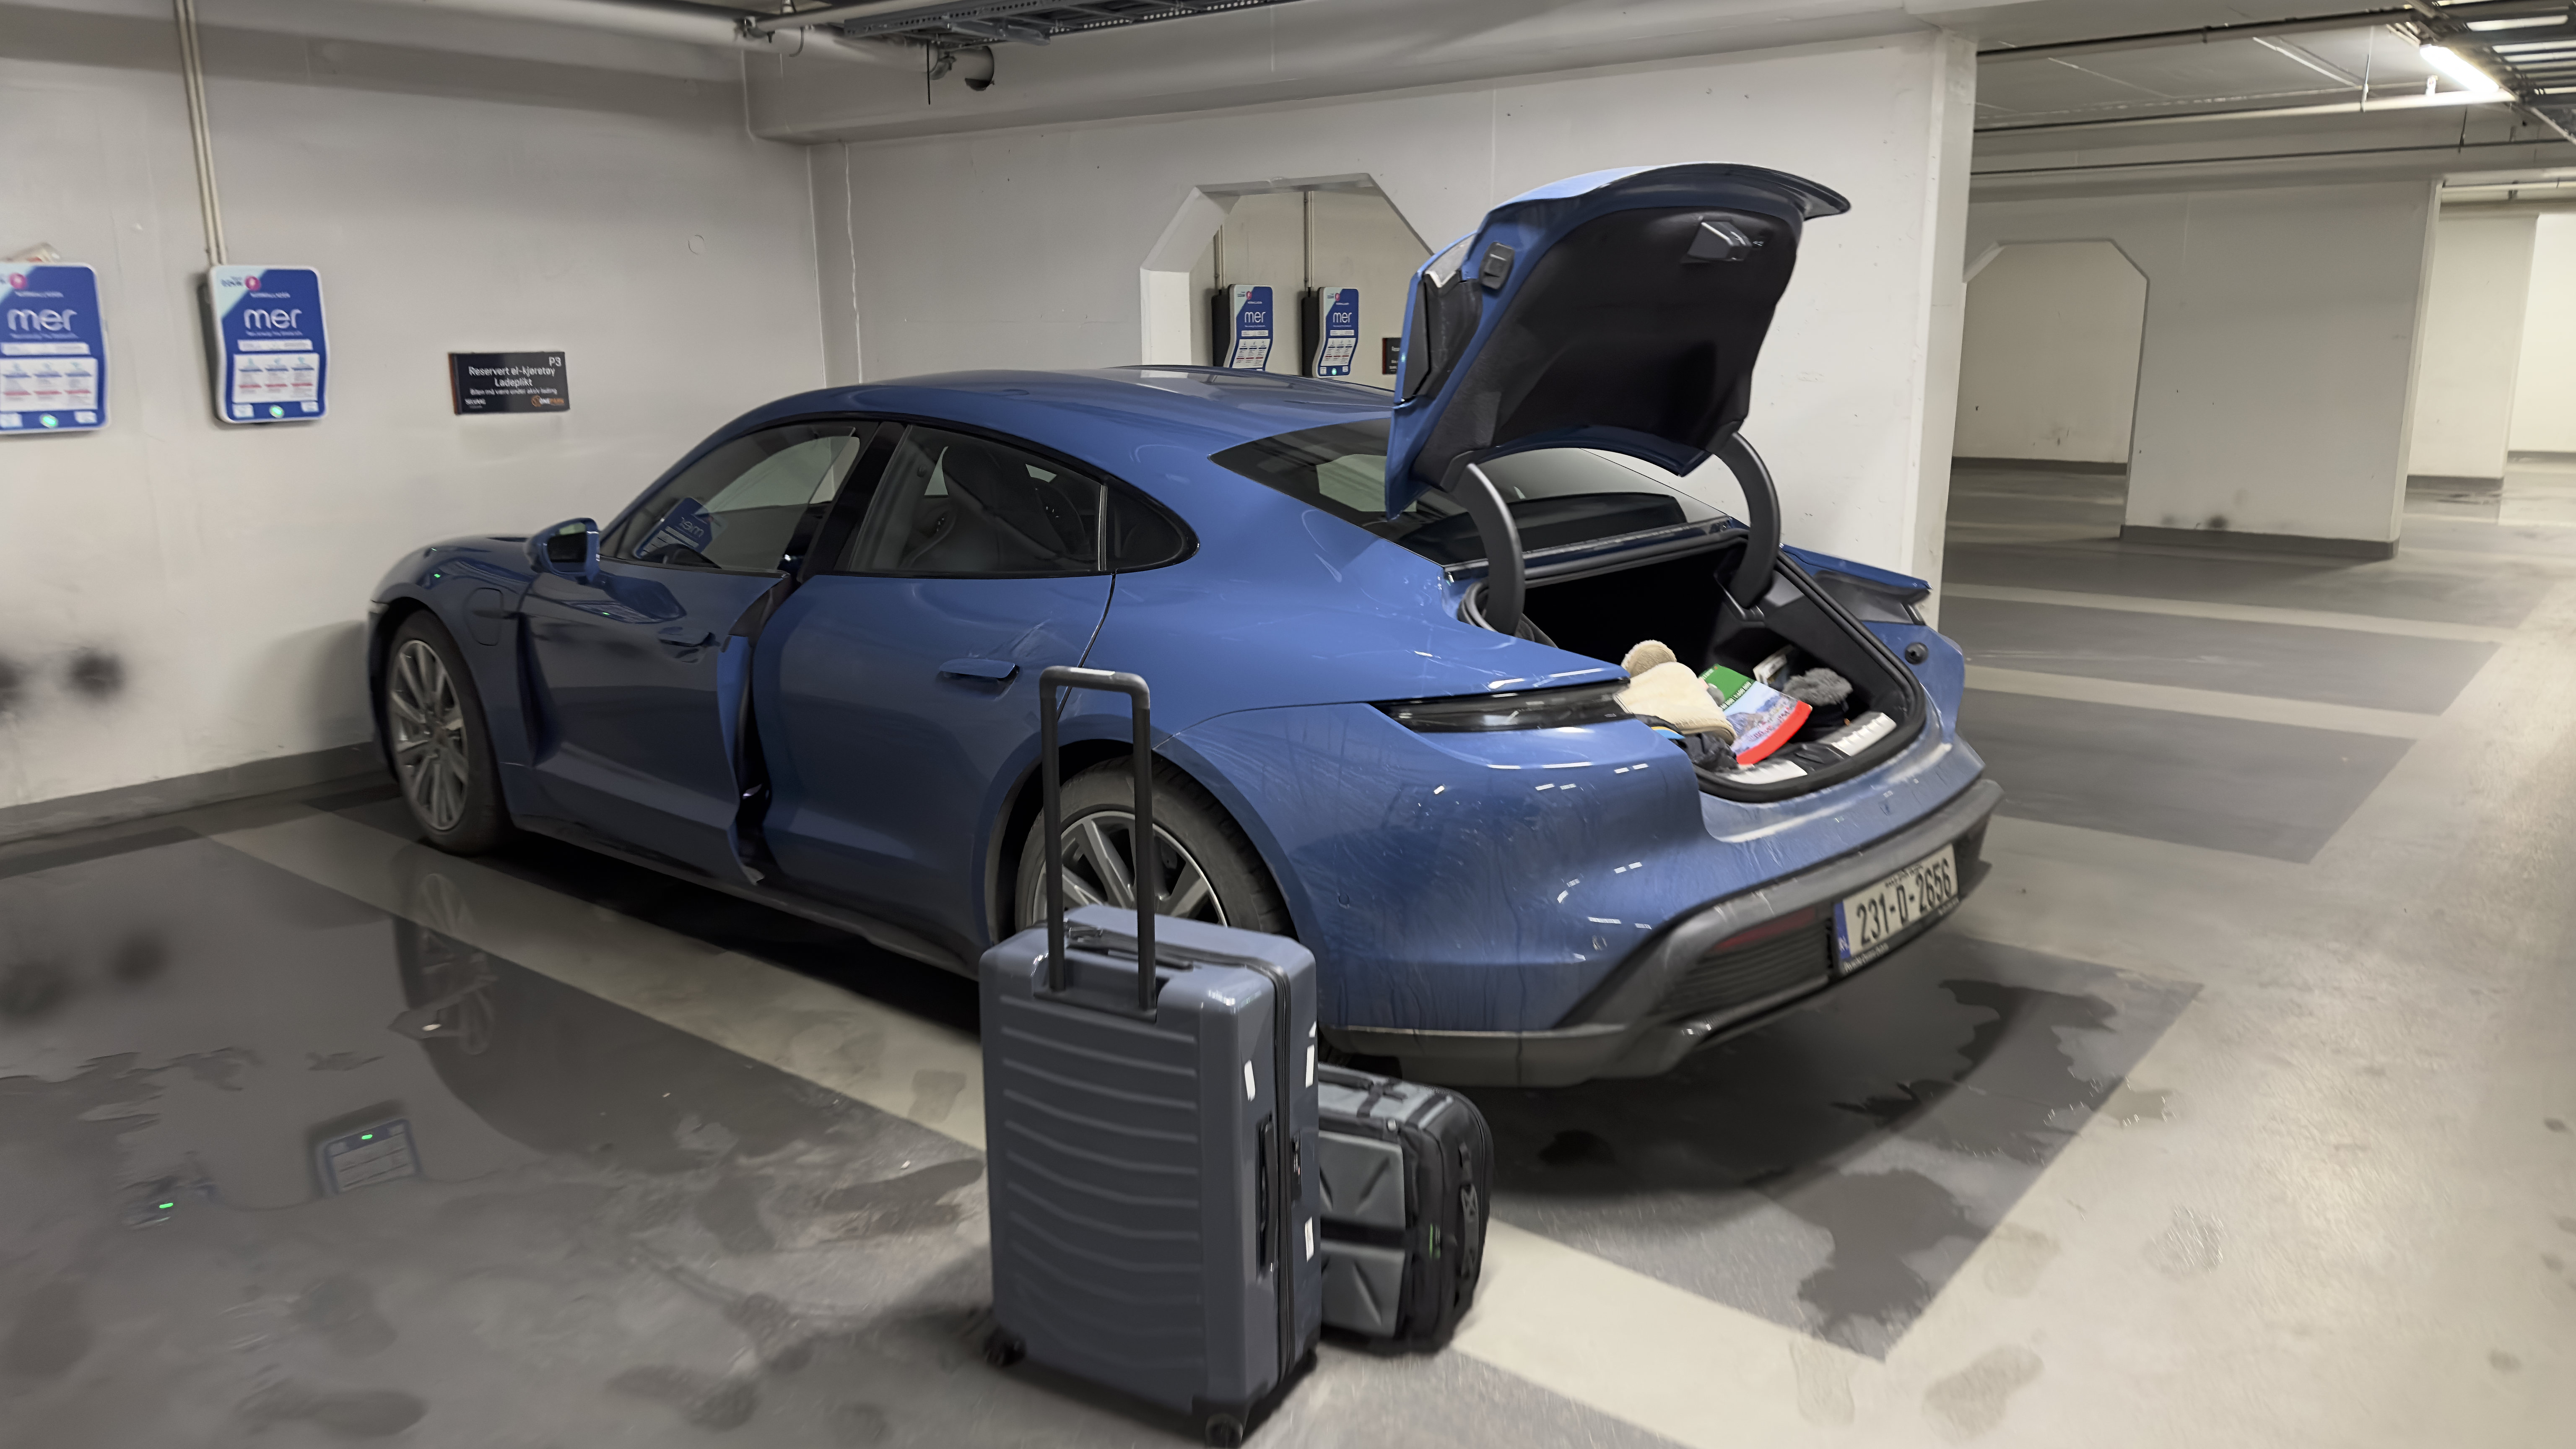 Porsche Taycan Taycan to Tromsø Road Trip – Winter 2023 (Arctic Norway) {filename}